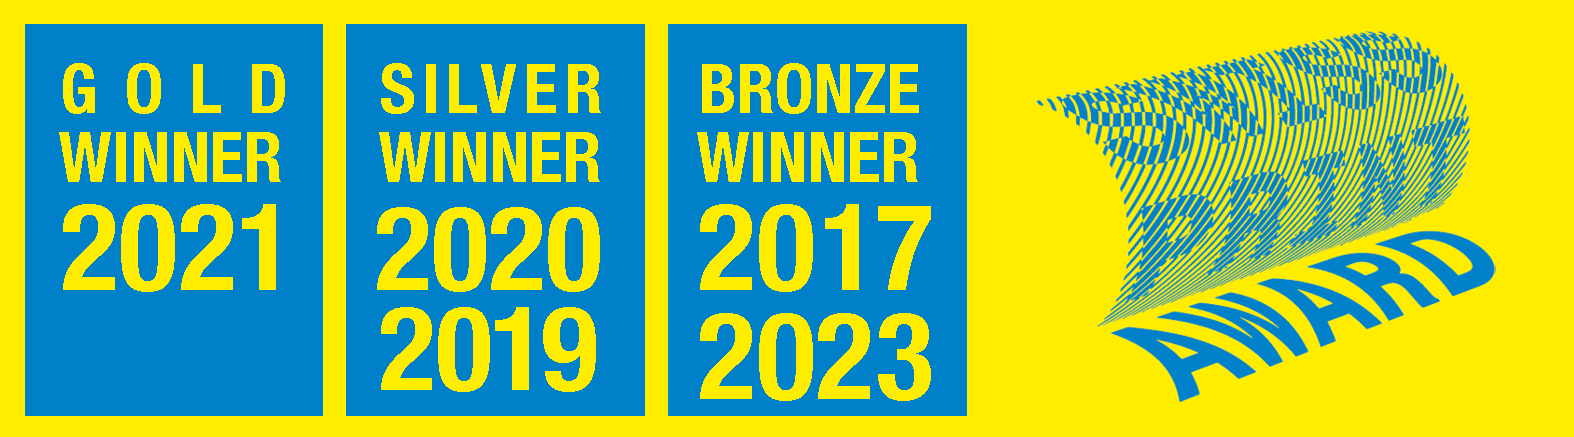 SWISS PRINT AWARD: Gold Winner 2021 | Silver Winner 2020 & 2019 | Bronze Winner 2017 & 2023